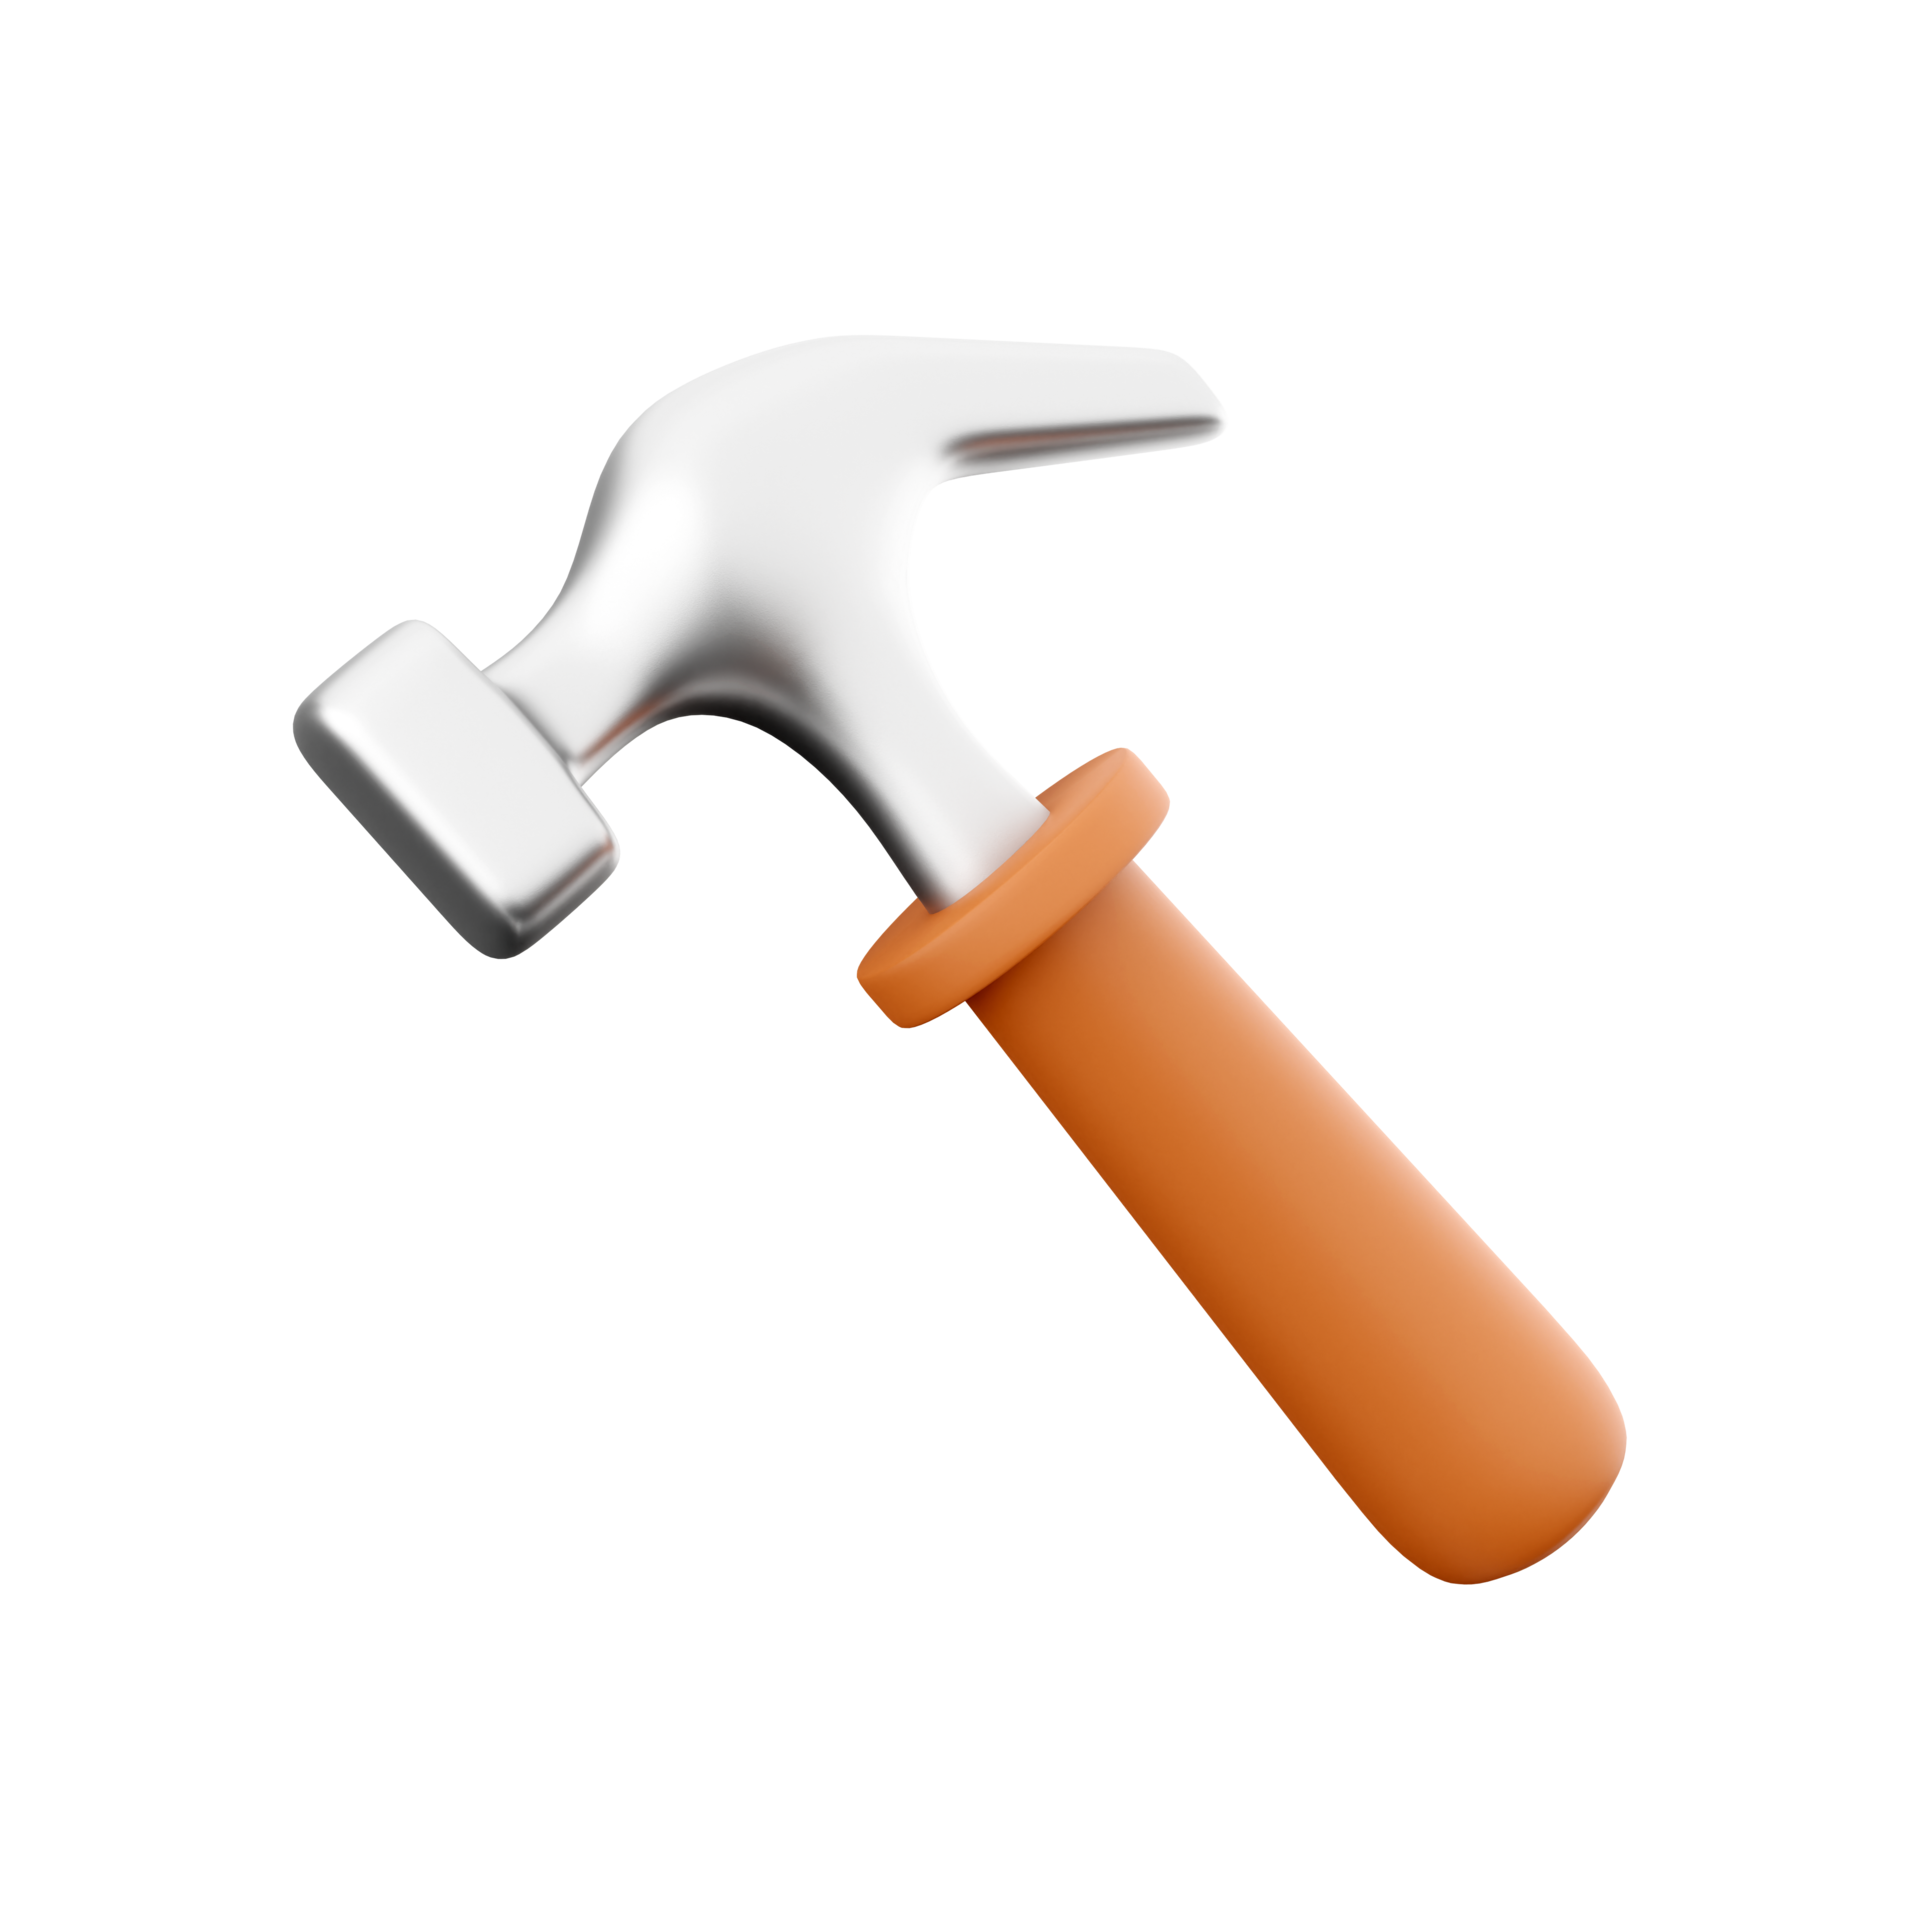 3D rendering of hammer hand tool on white background. 3D rendering